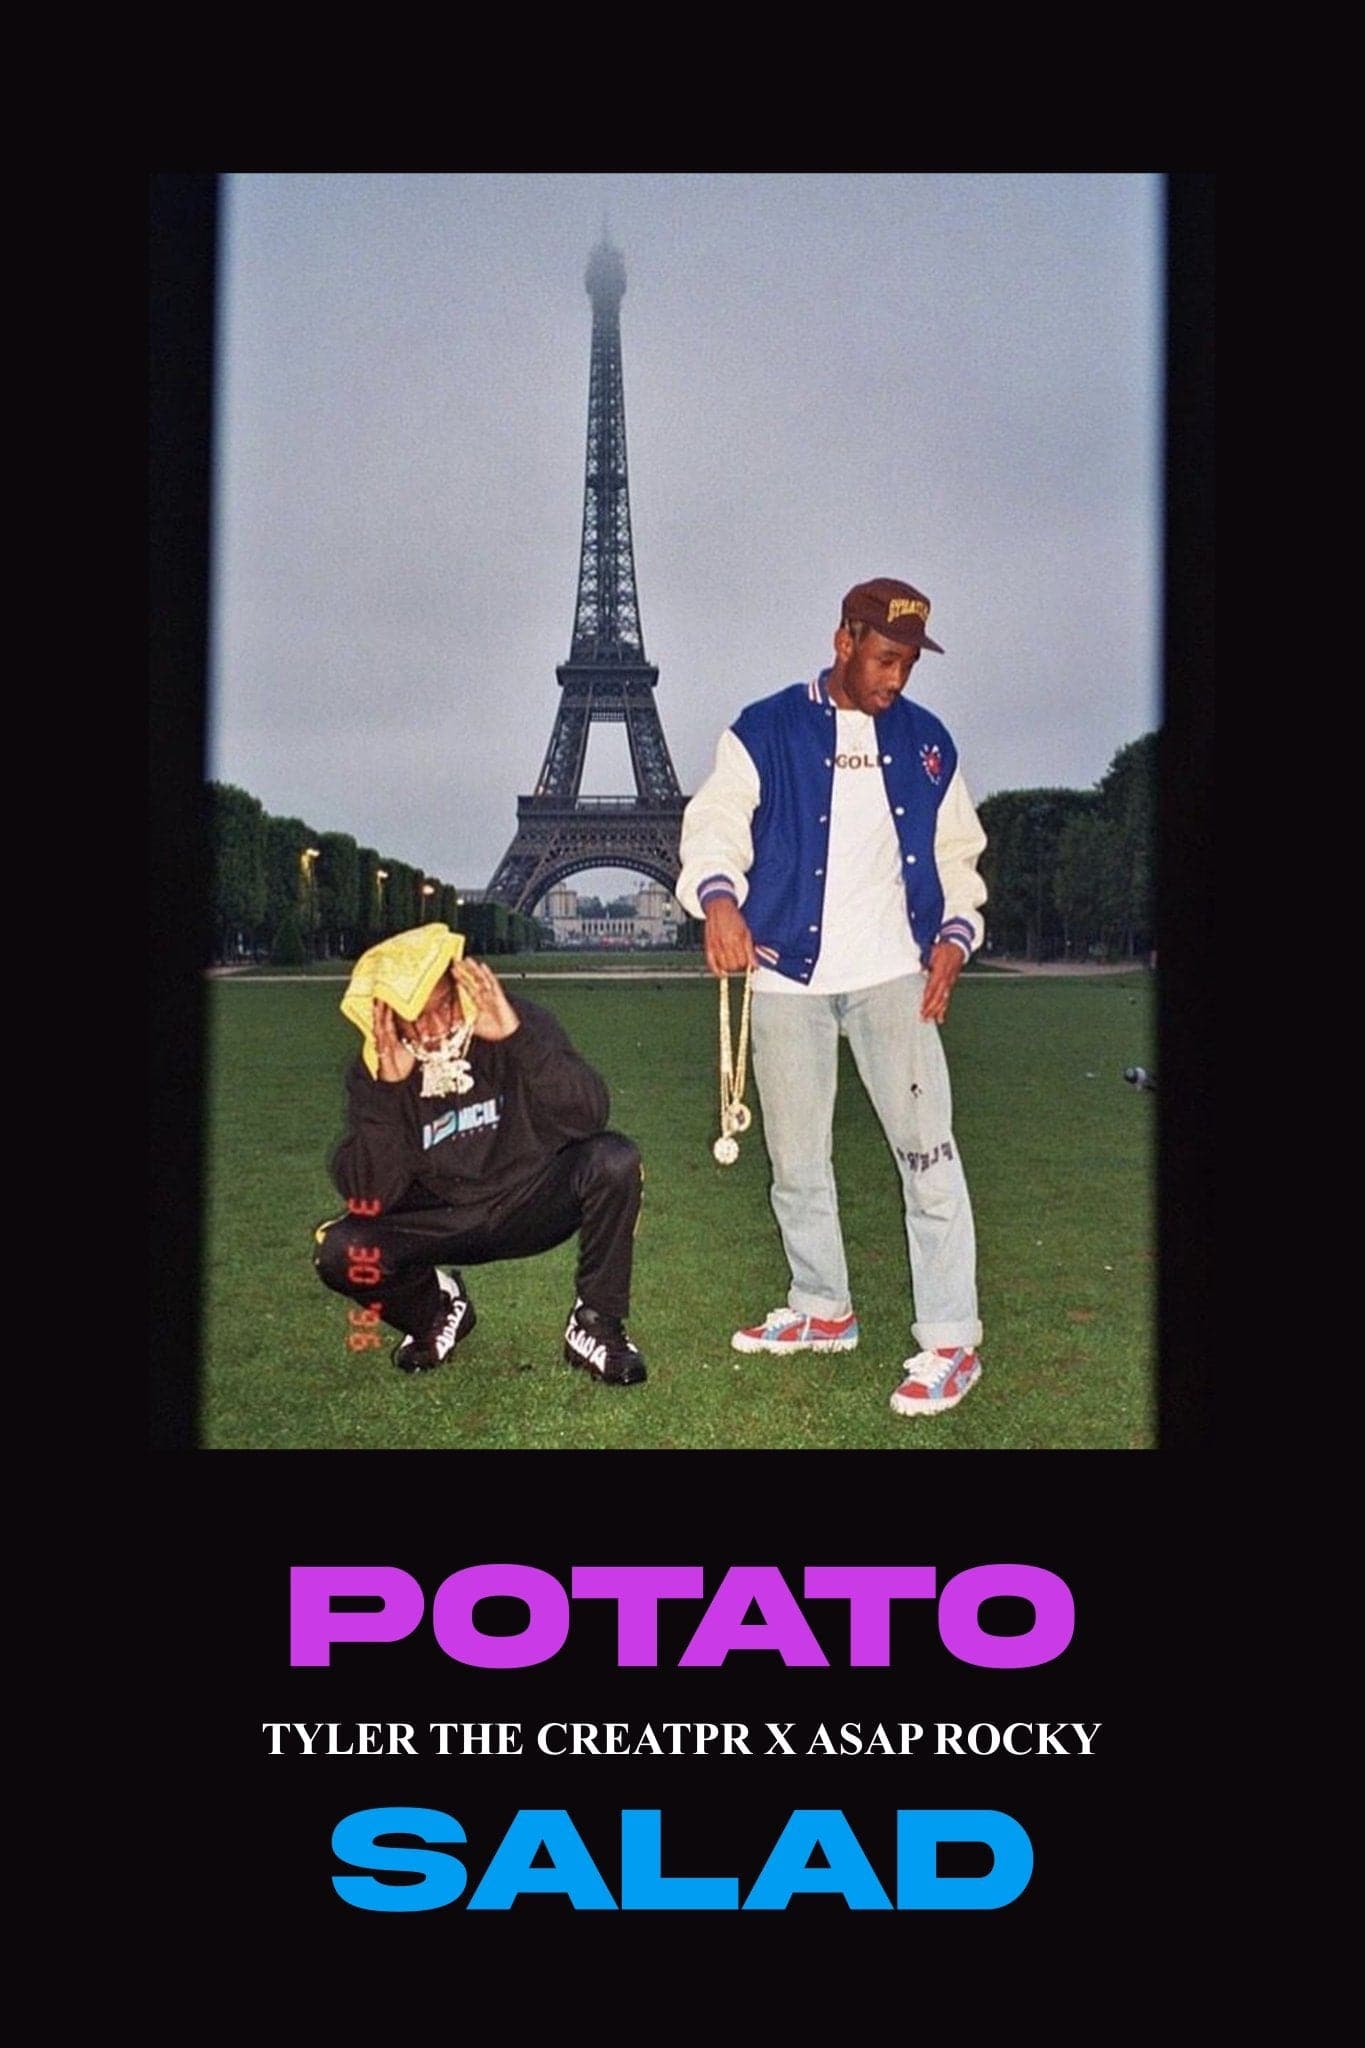 Tyler the Creator x A$AP Rocky ‘Potato Salad’ Poster - Posters Plug